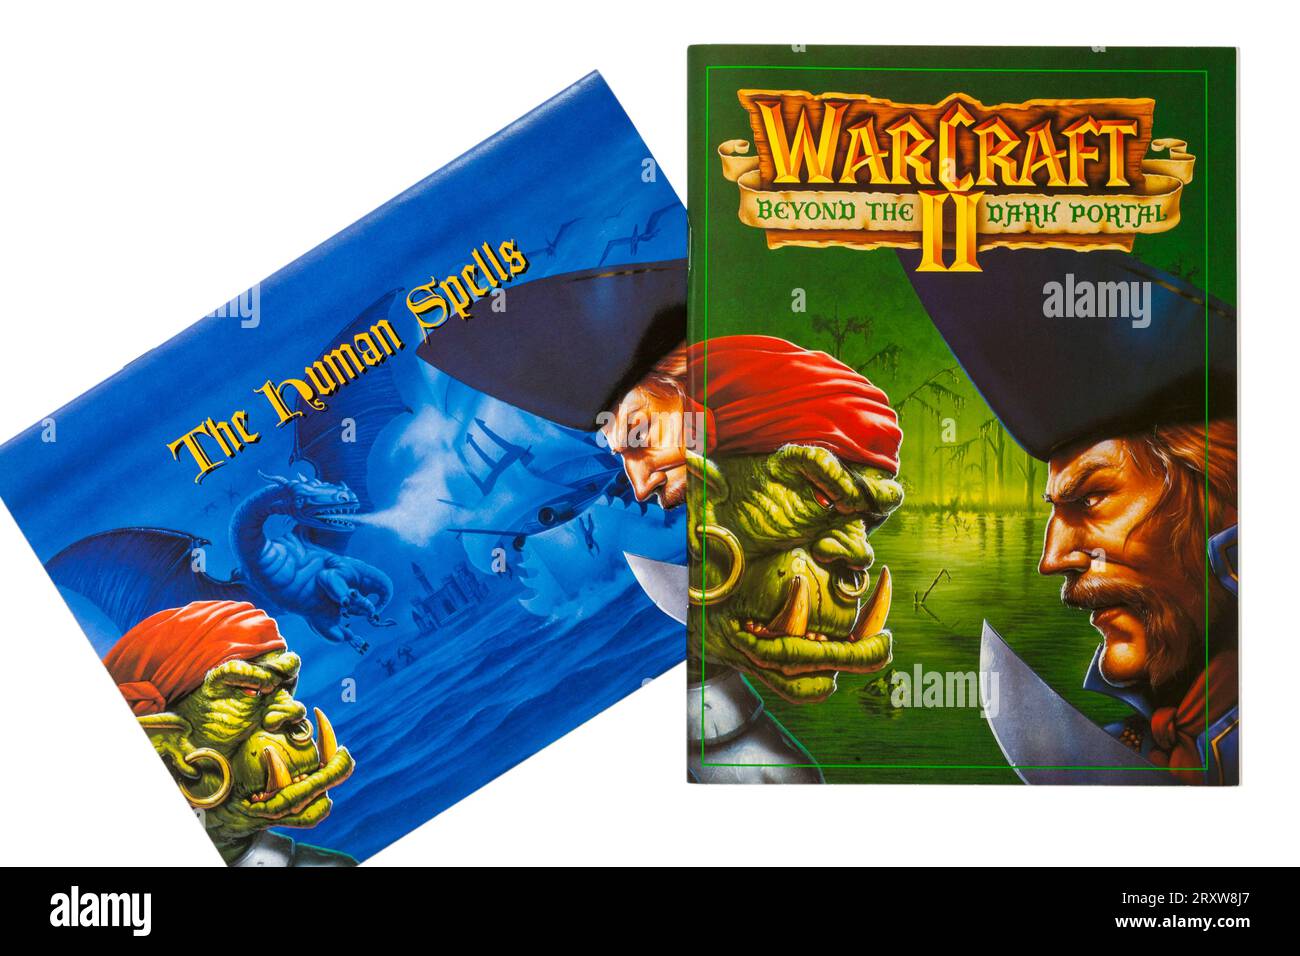 Warcraft II Tides of Darkness in edizione deluxe, Warcraft II Beyond the Dark Portal e Human Spells su sfondo bianco Foto Stock